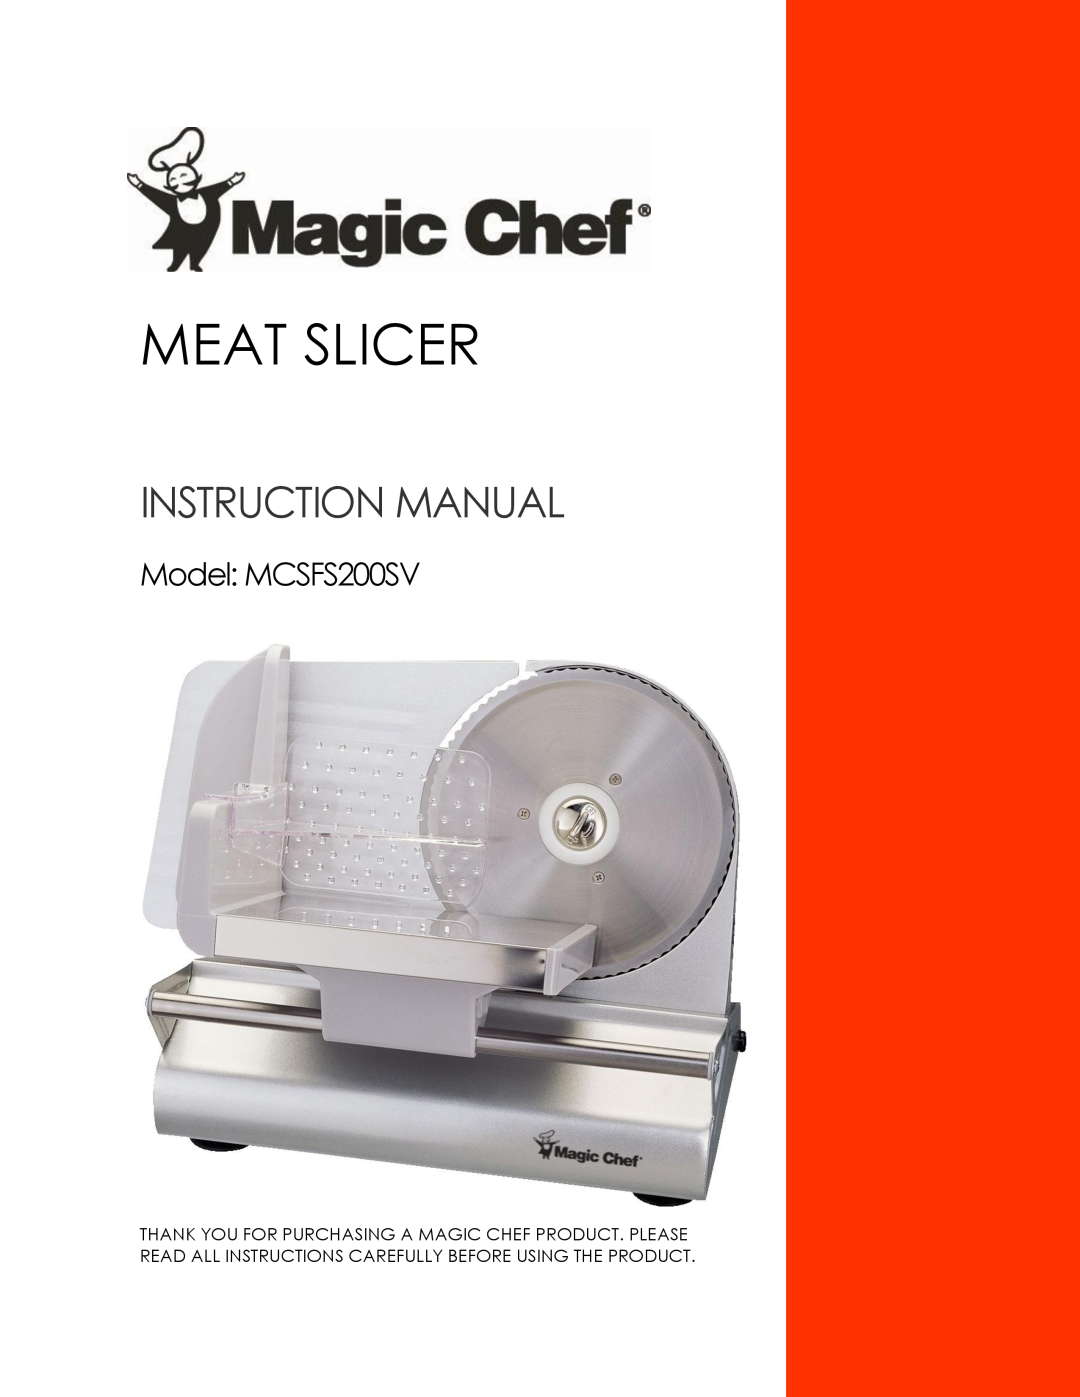 Magic Chef instruction manual Meat Slicer, Model MCSFS200SV 